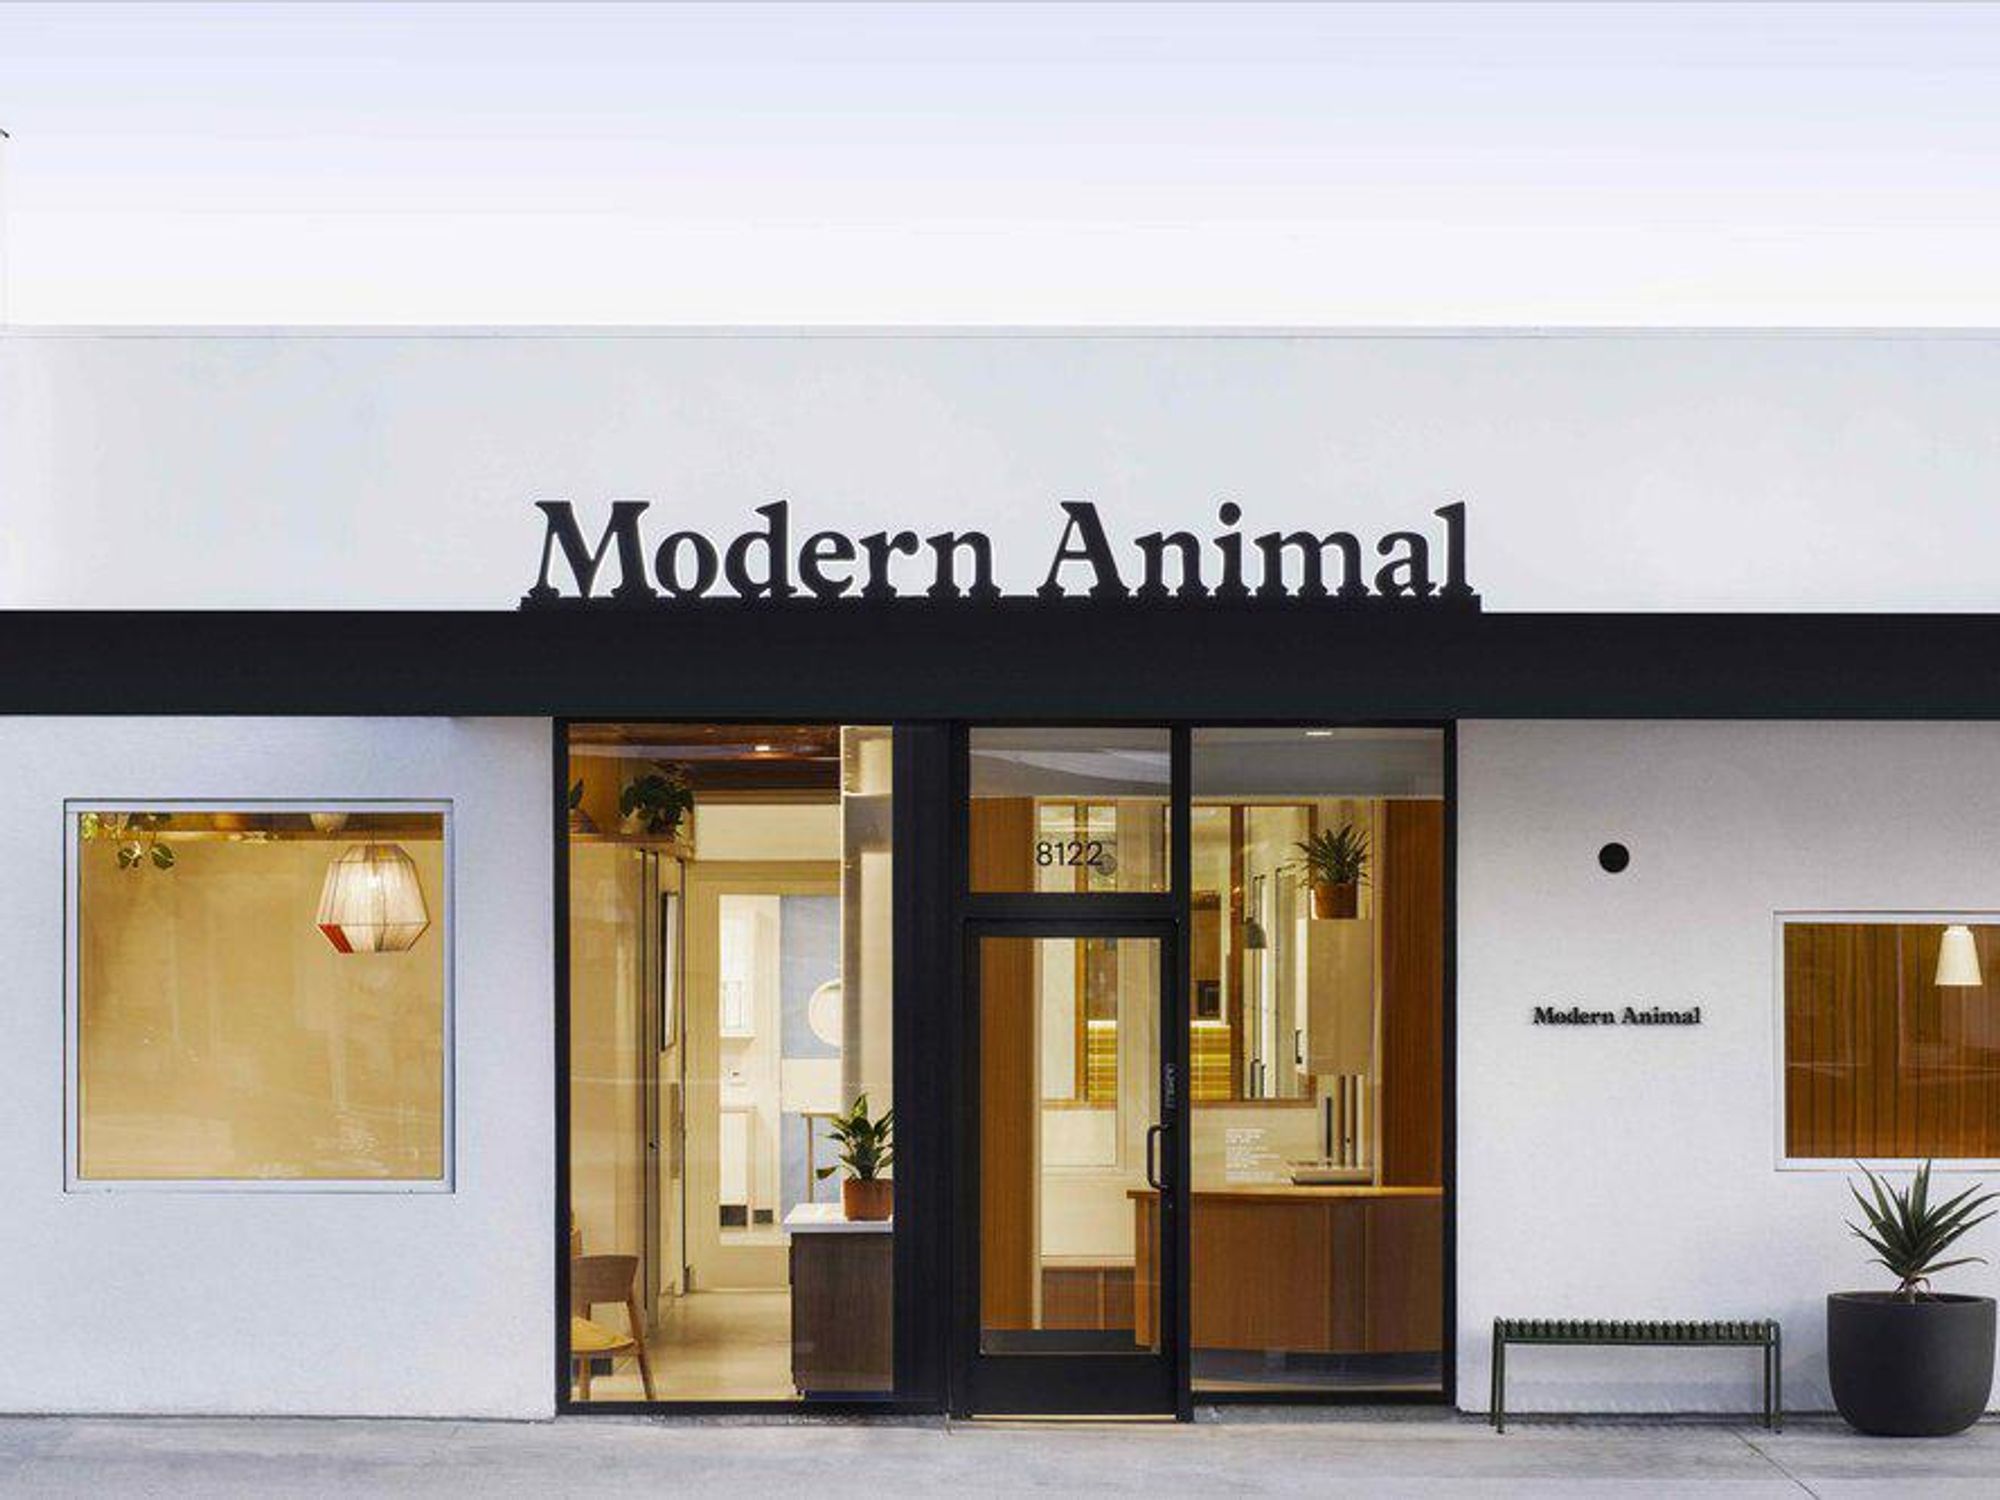 Modern Animal